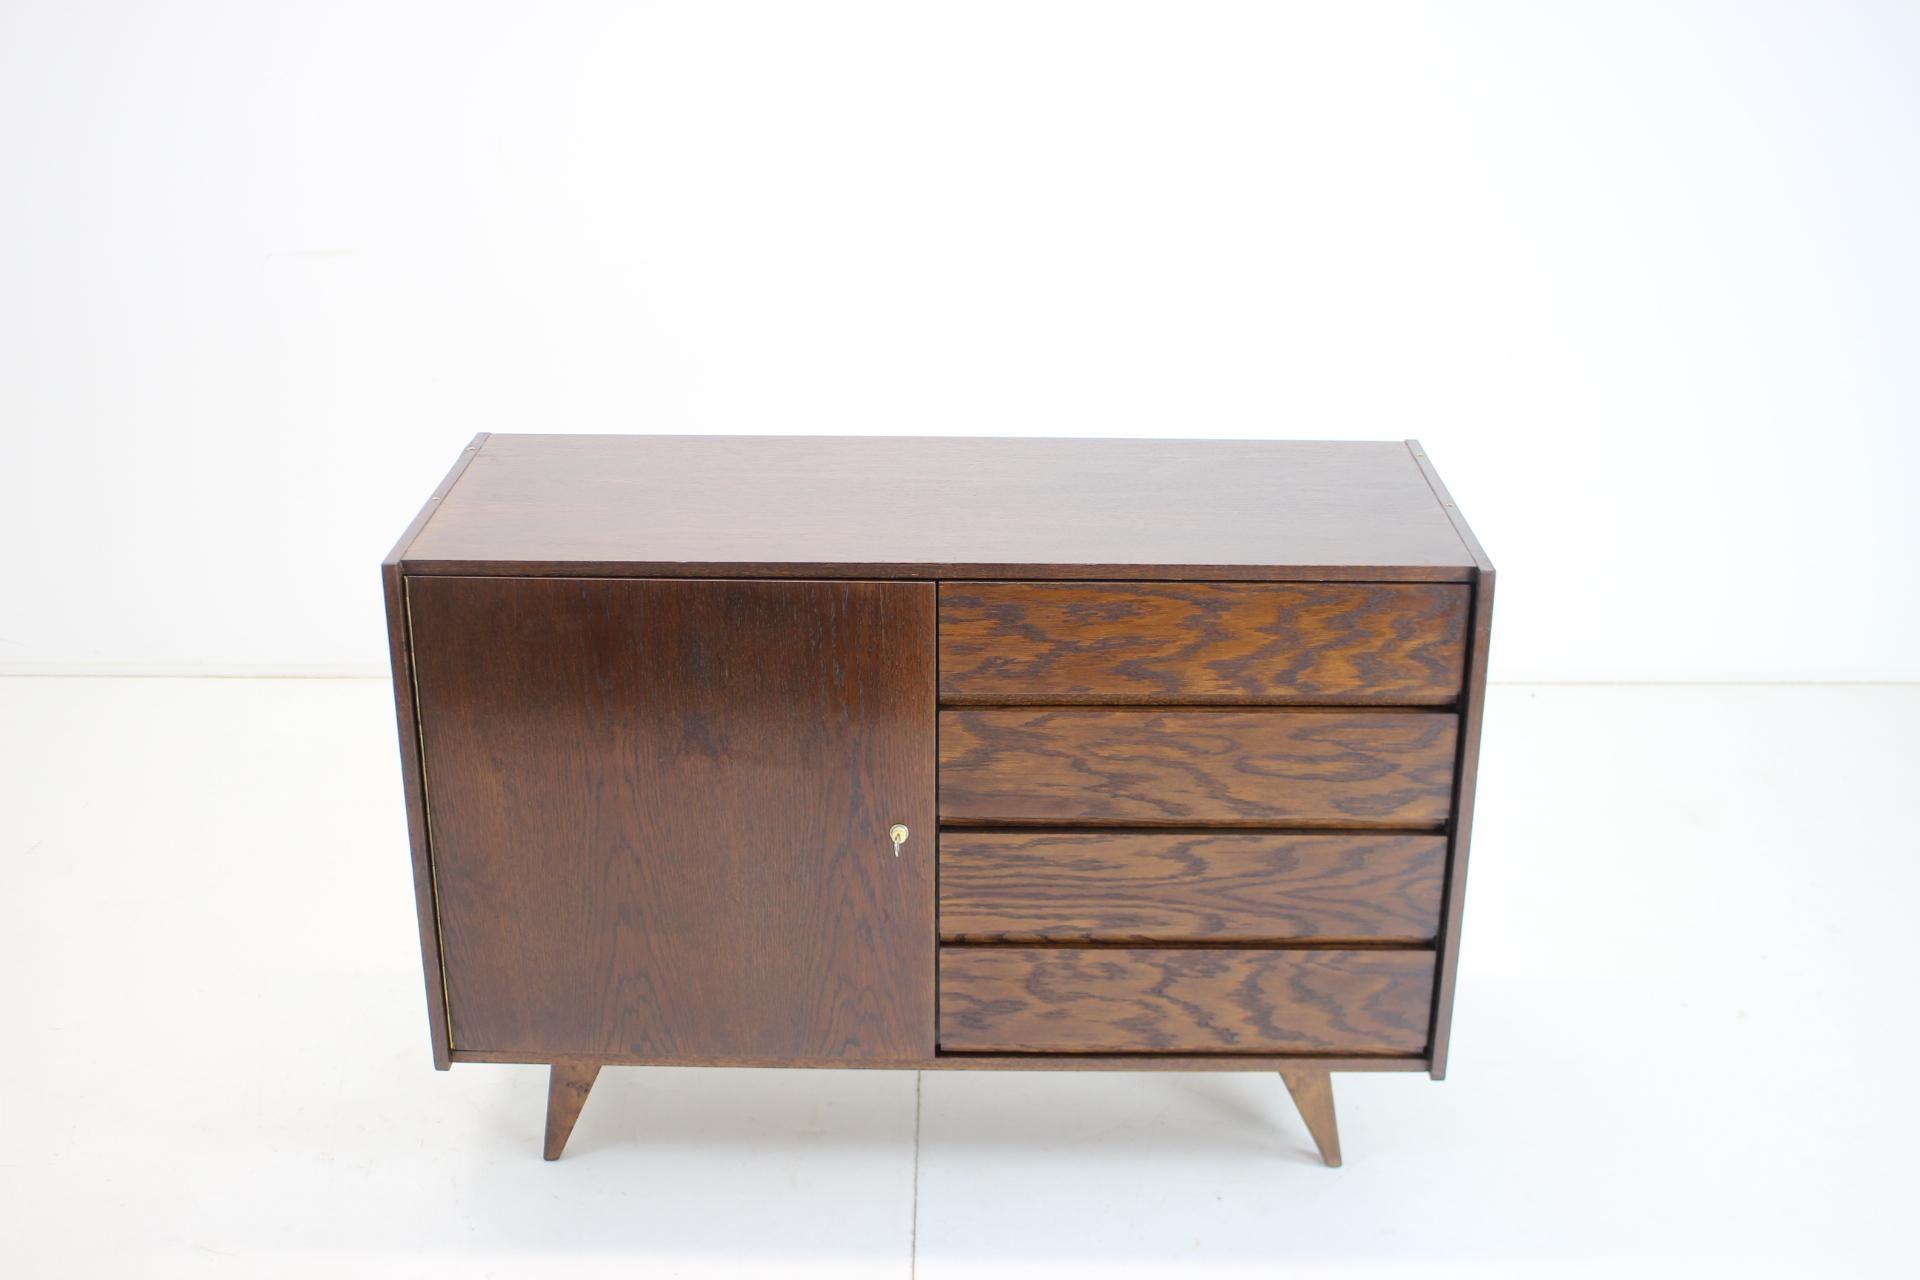 Made of oak, wood
Made in Czechoslovakia 1960s
Good original condition
Designer Jiri Jiroutek